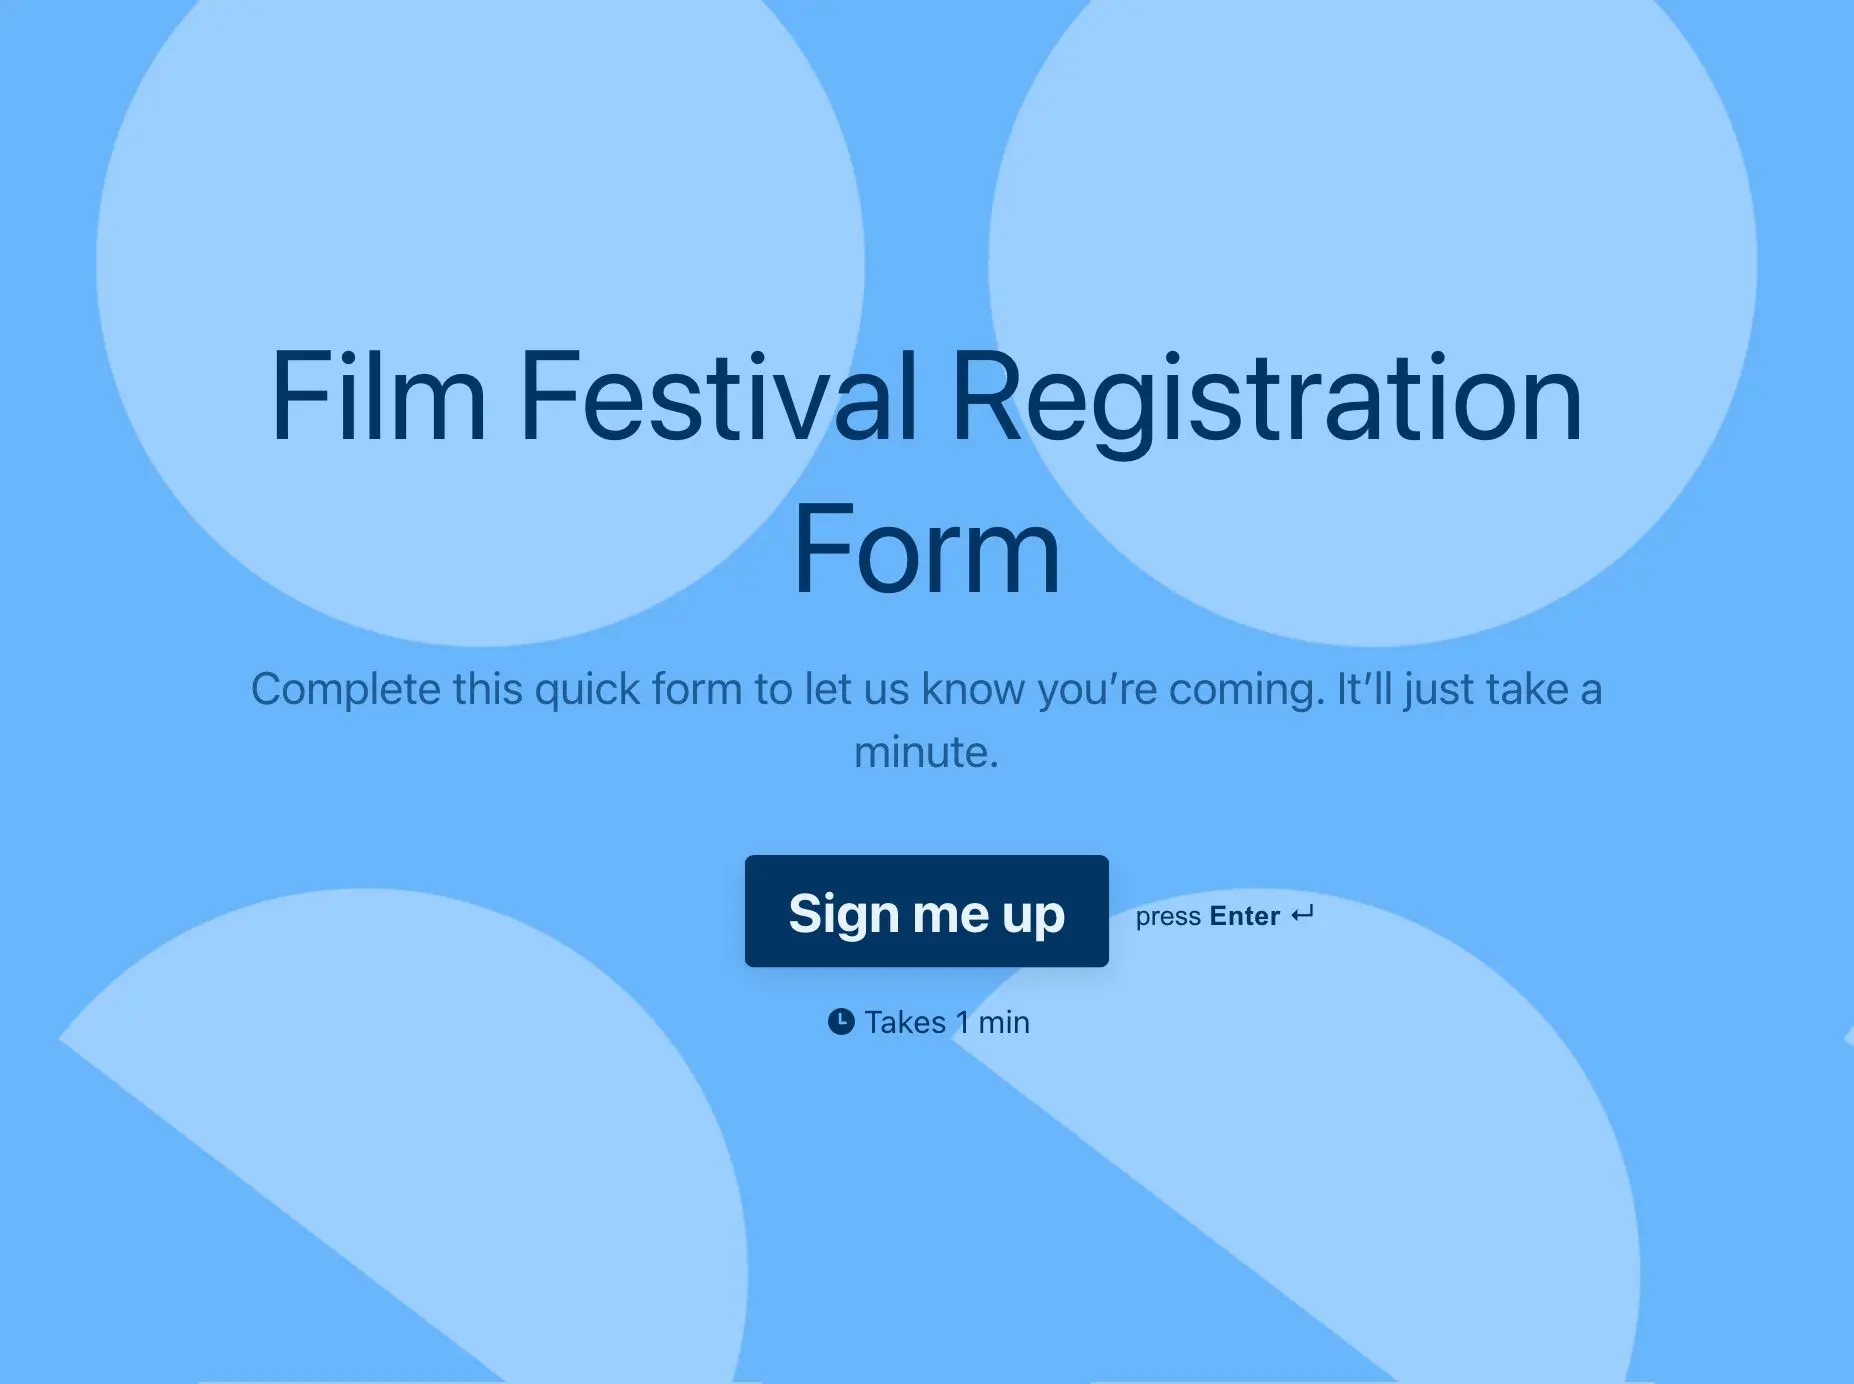 Film Festival Registration Form Template Hero